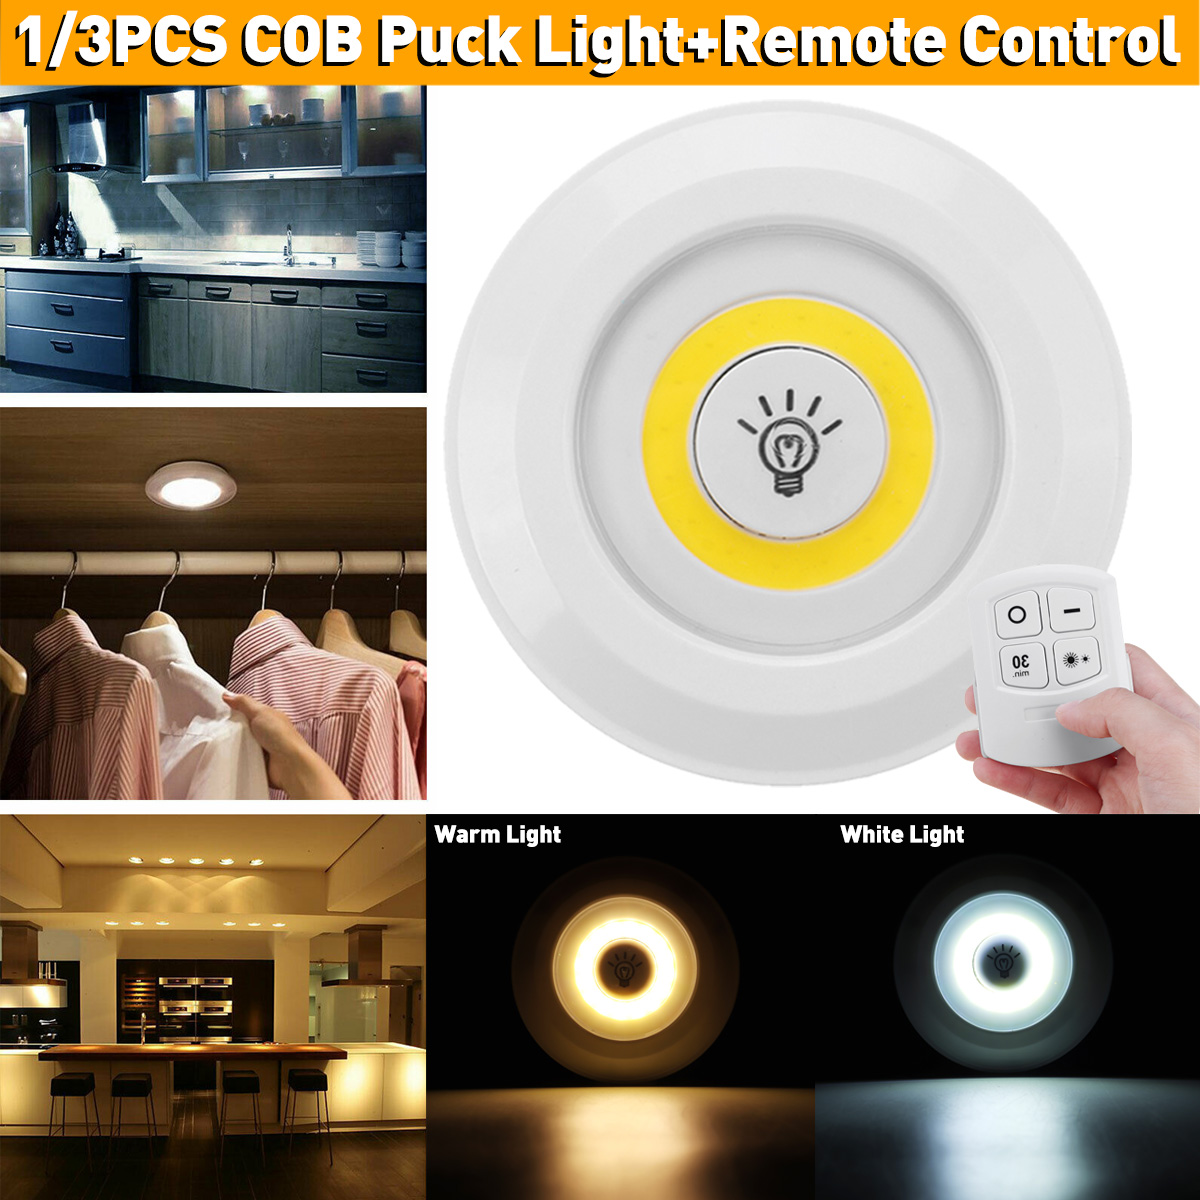 13PCS-Under-Cabinet-Lights-Closet-Kitchen-Counter-COB-Puck-LightRemote-Control-1830265-1